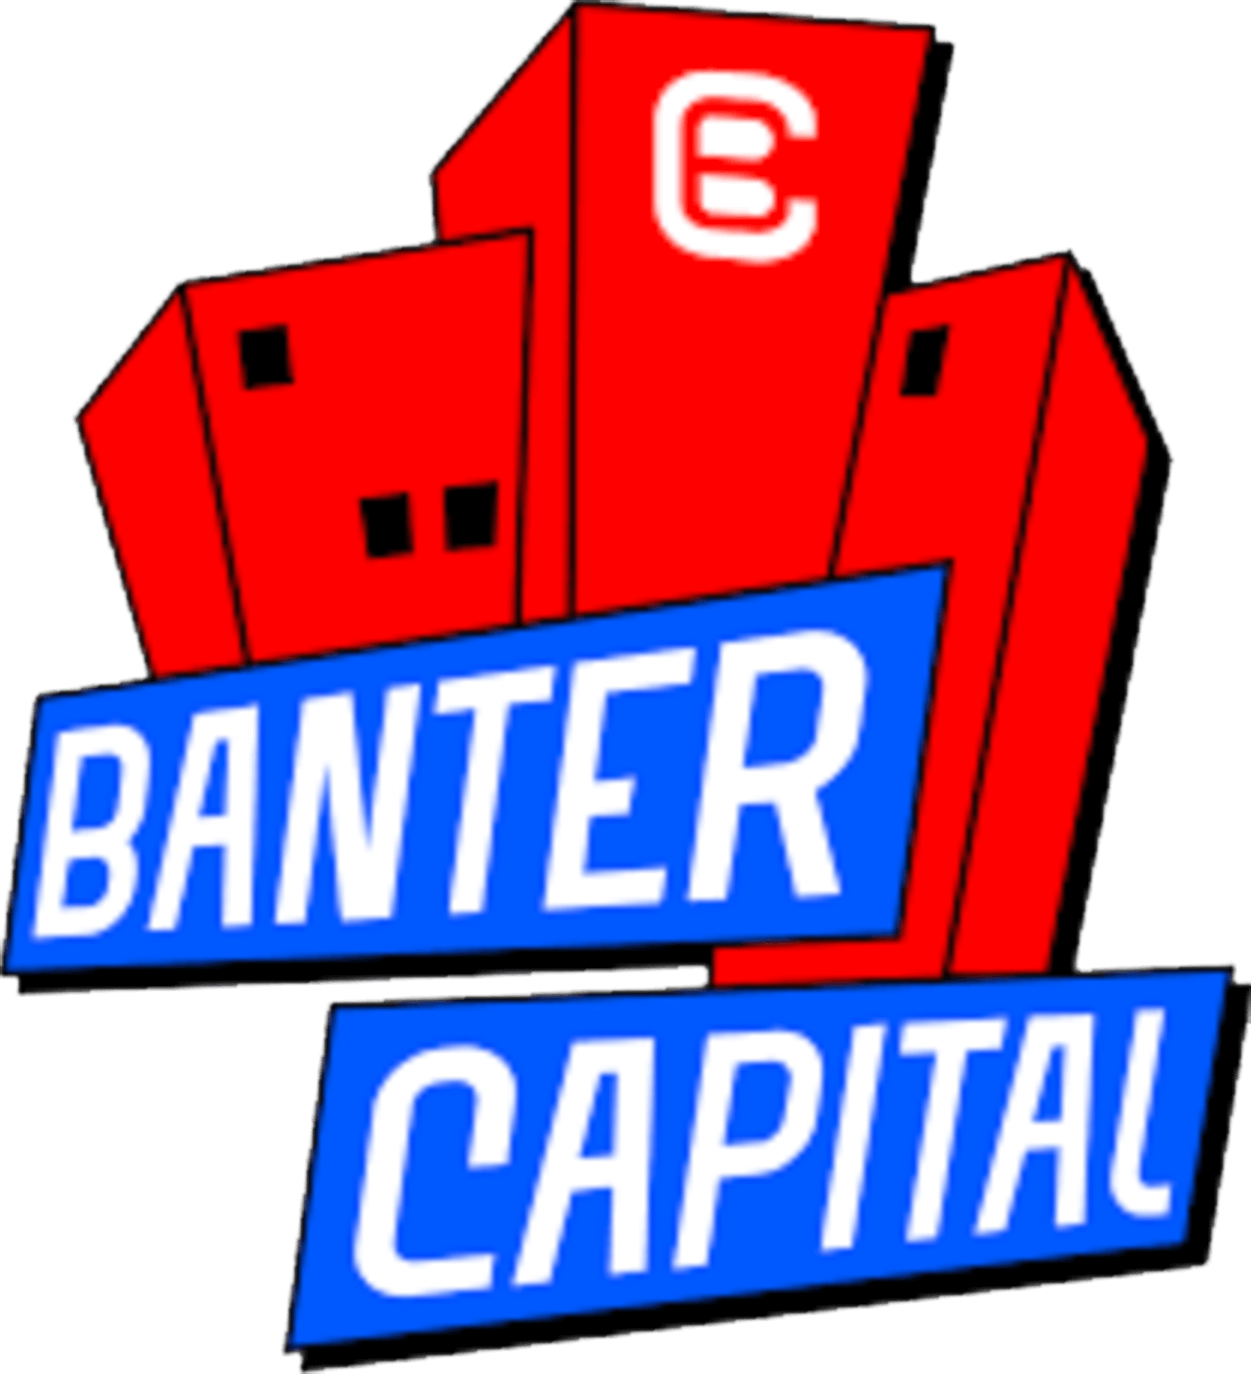 Banter Capital | Lead investor